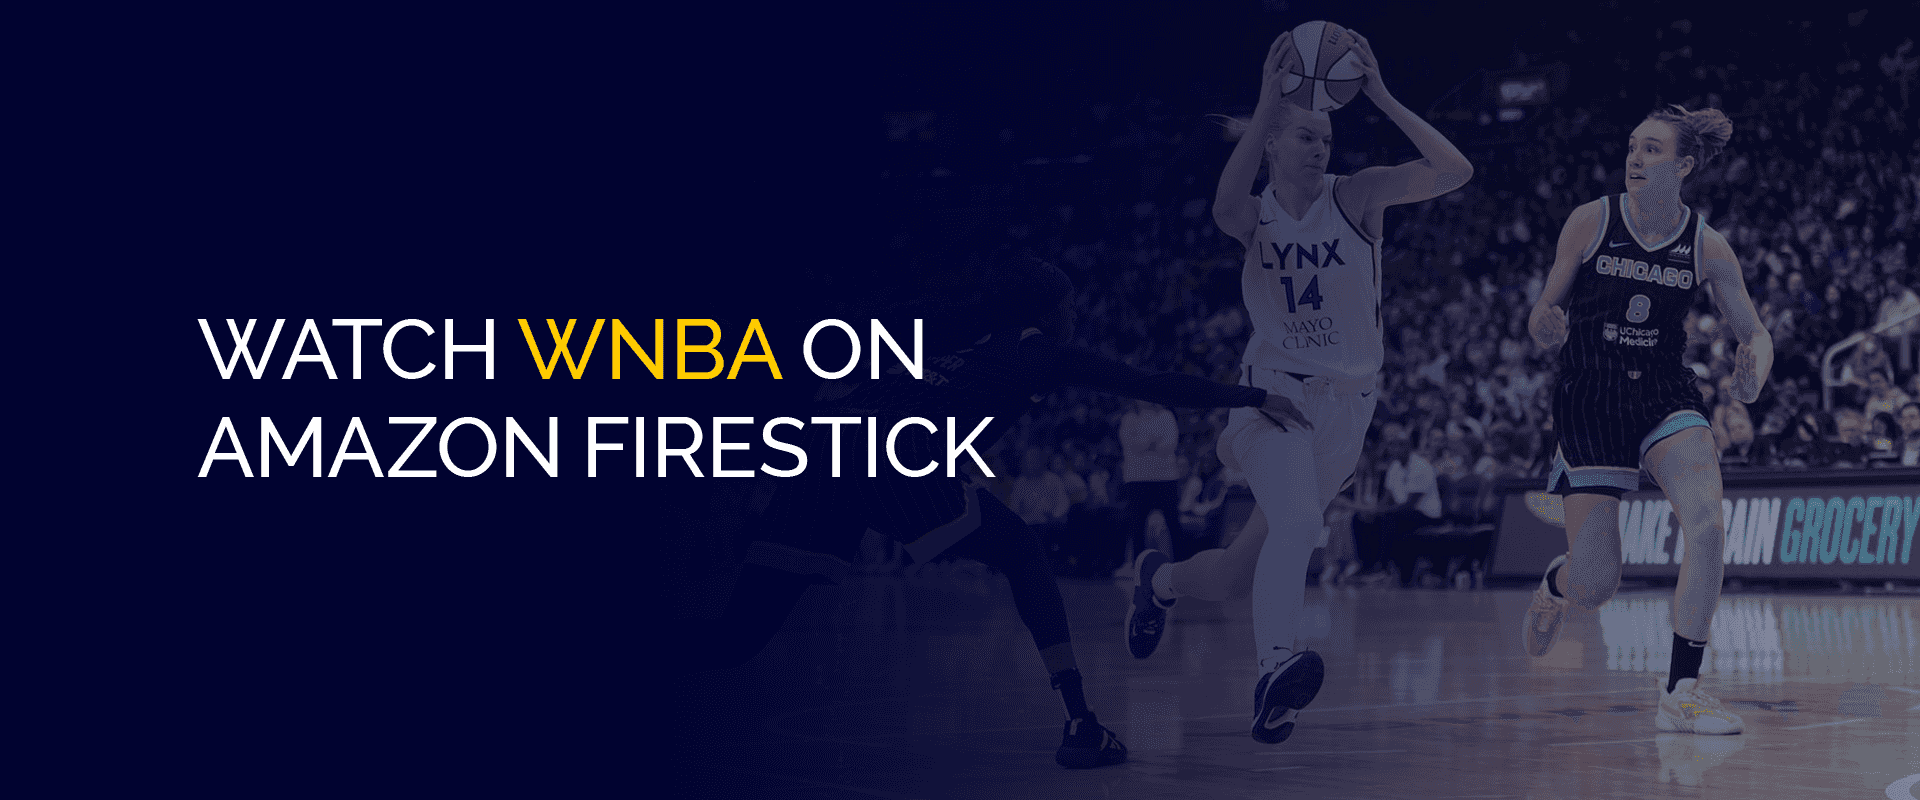 Assista WNBA no Amazon Firestick